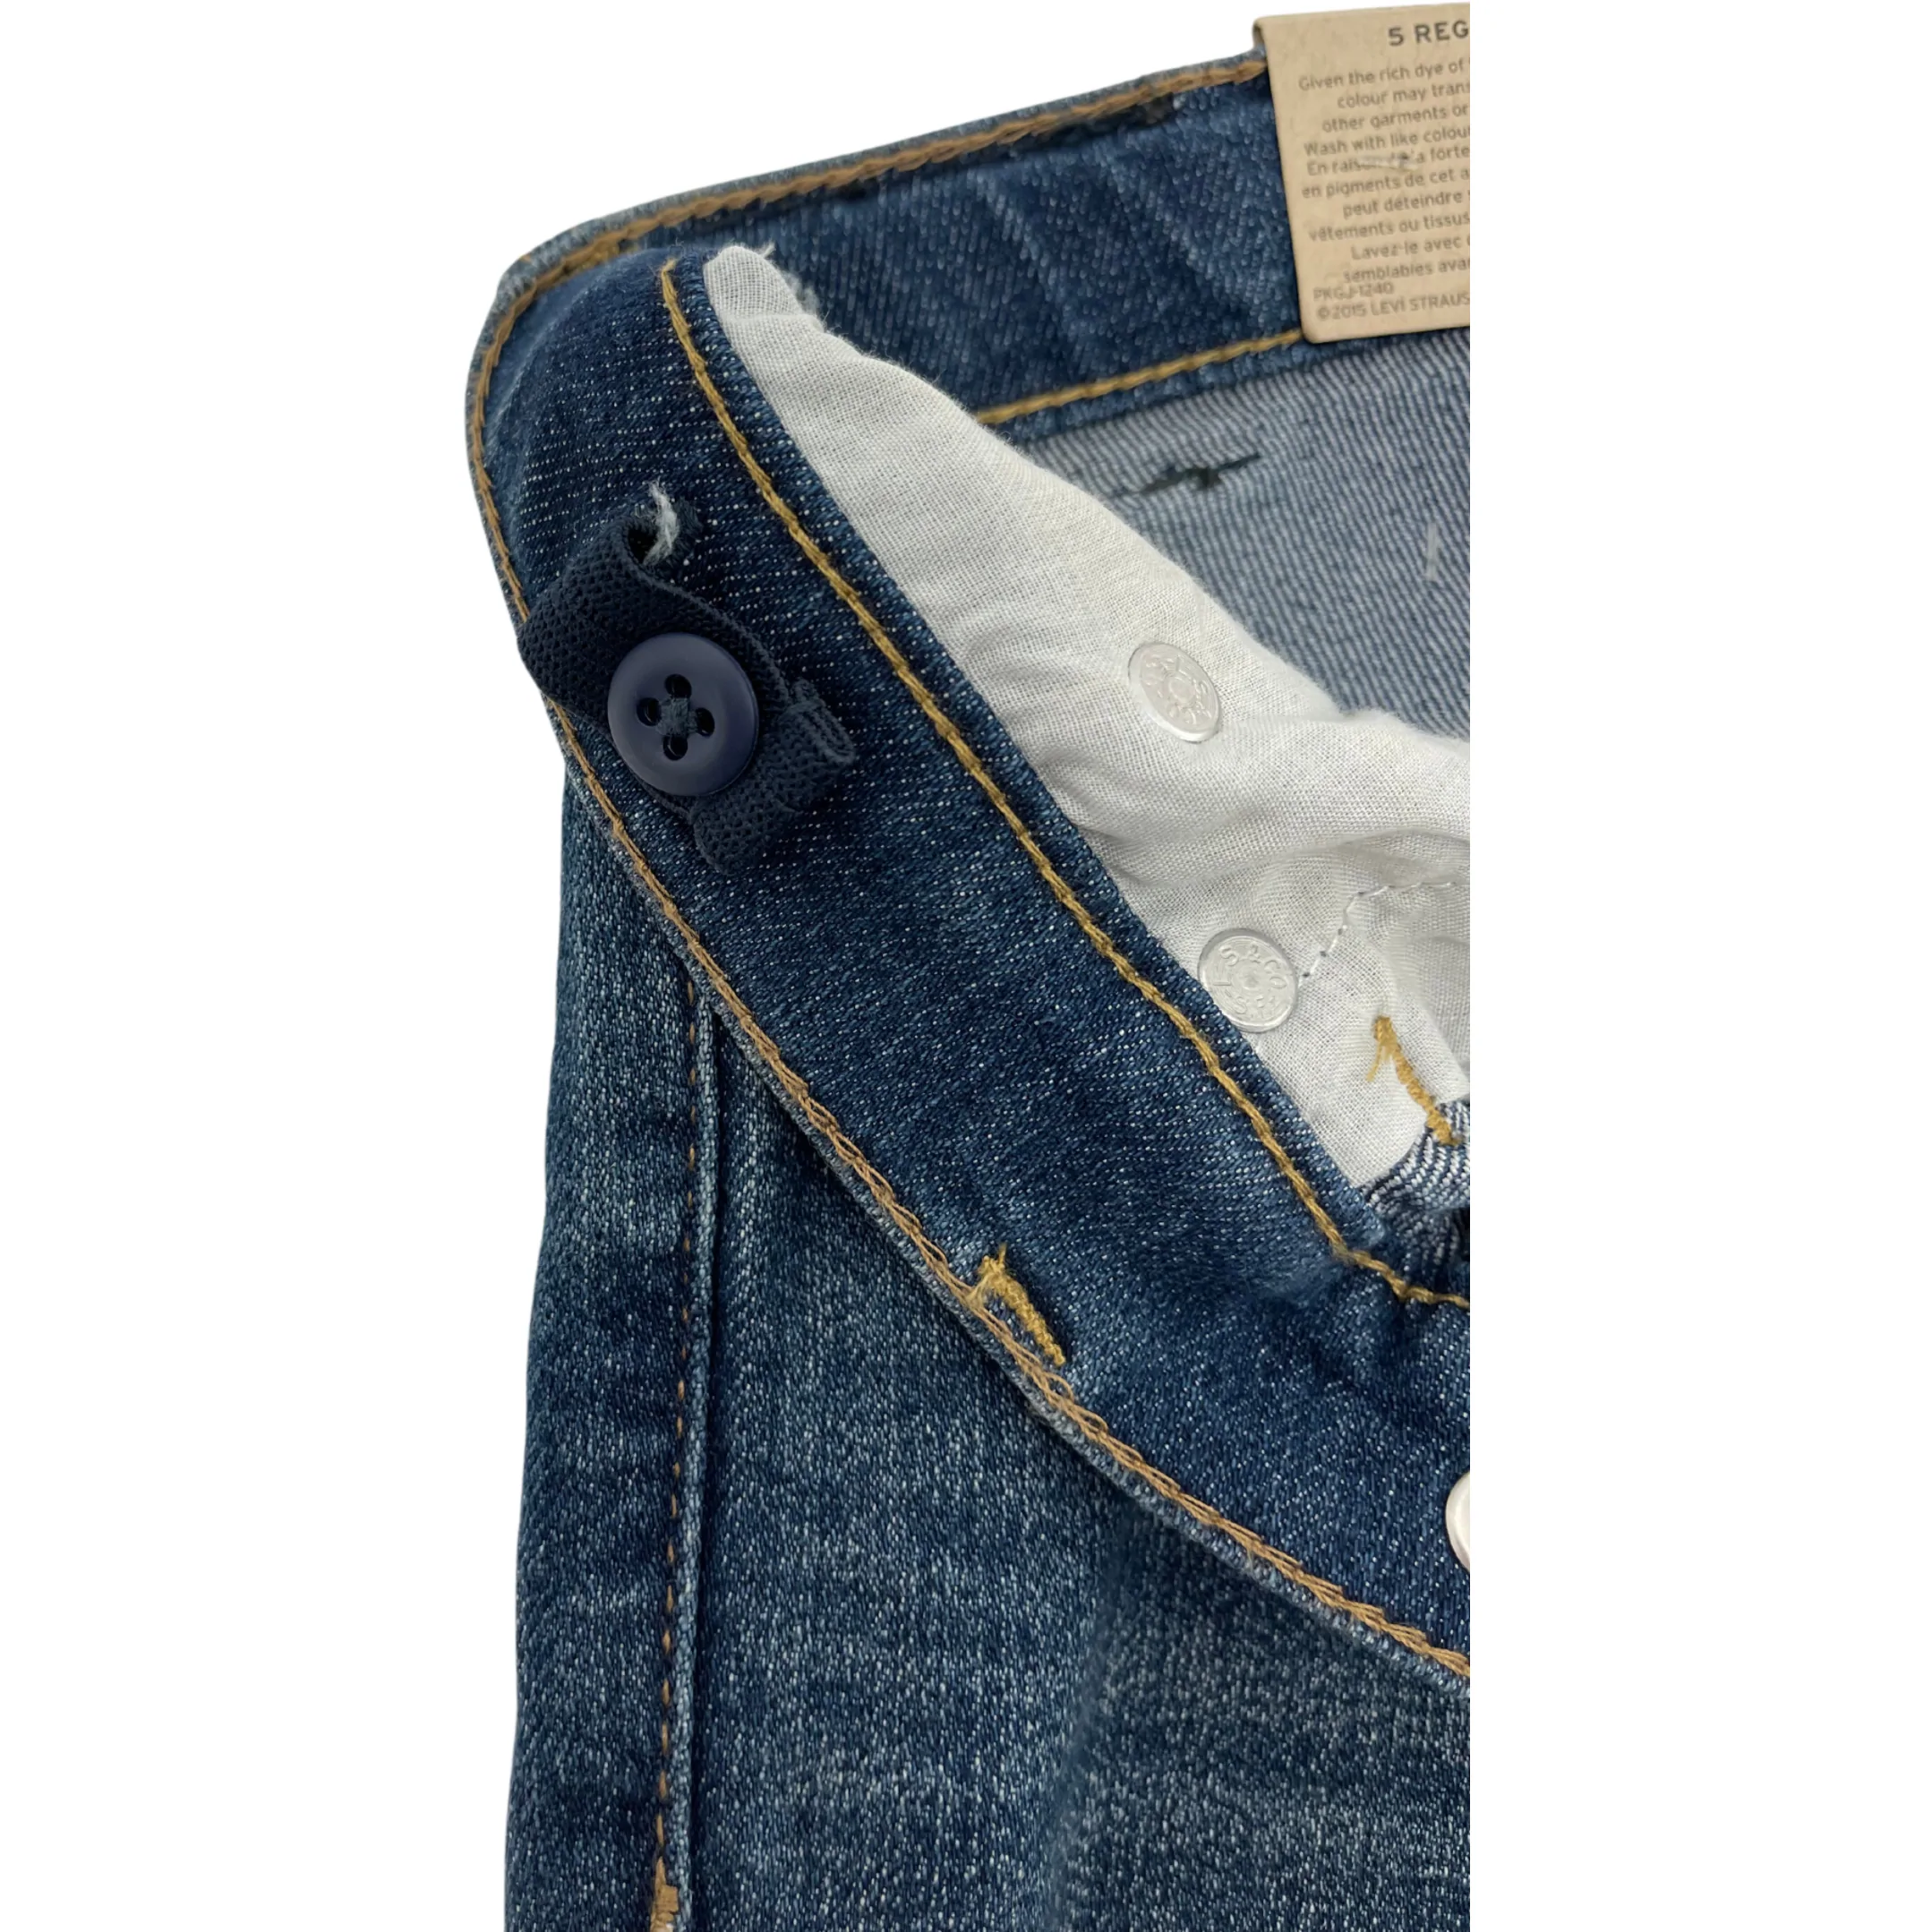 Levi's Boy's Jeans / Slim Fit / Adjustable Waist / Regular Wash / Size 5 Reg